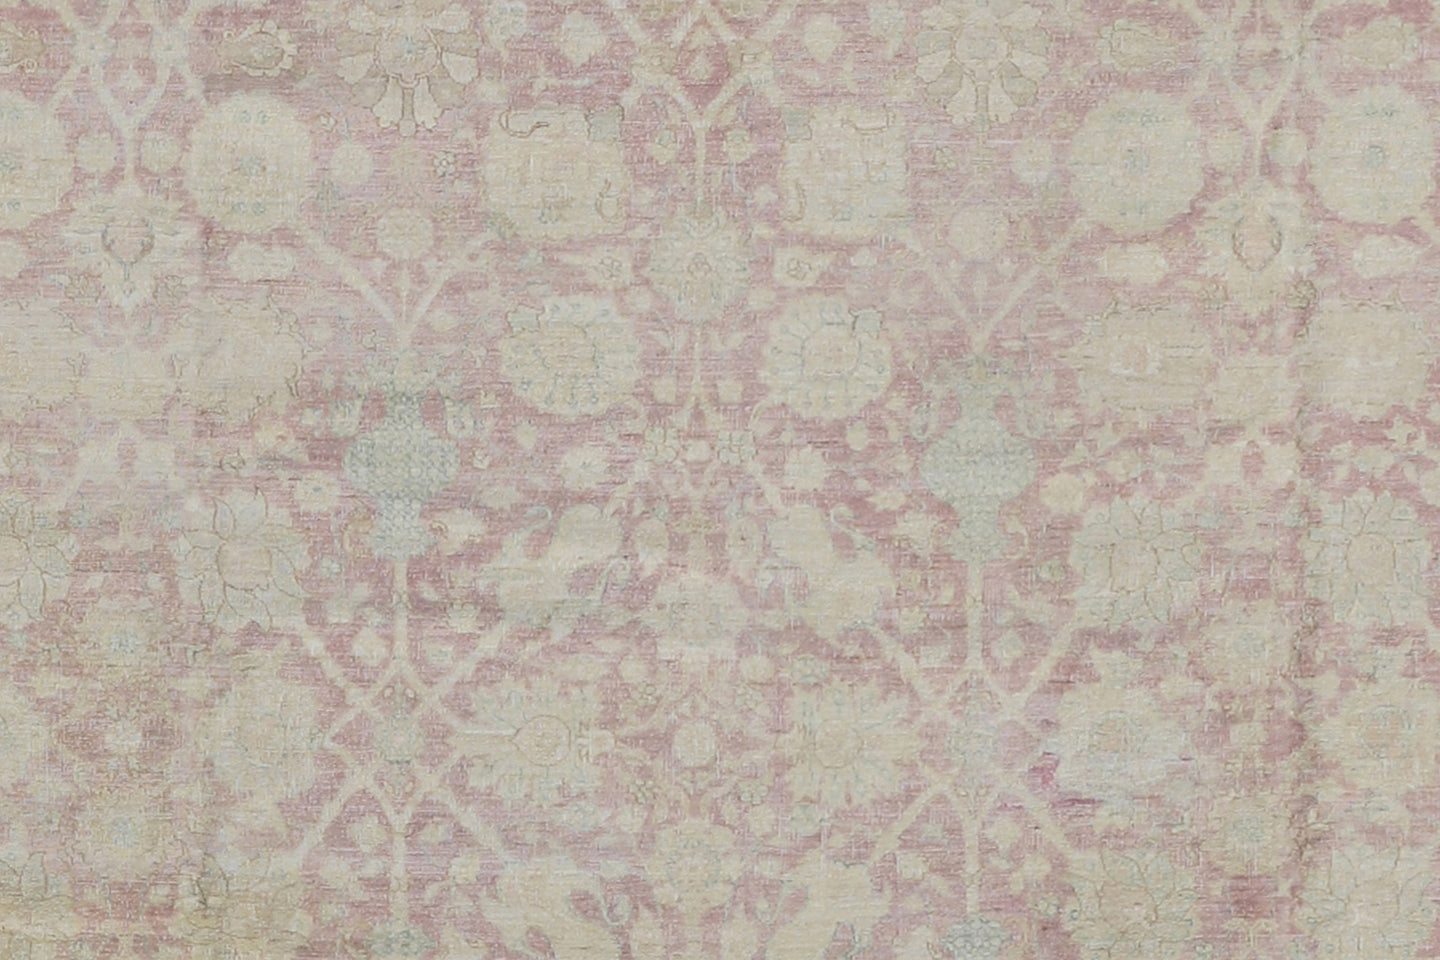 12' x 18' Tabriz Design Pink with Cream Border Wool and Silk Ariana Luxury Palace Rug